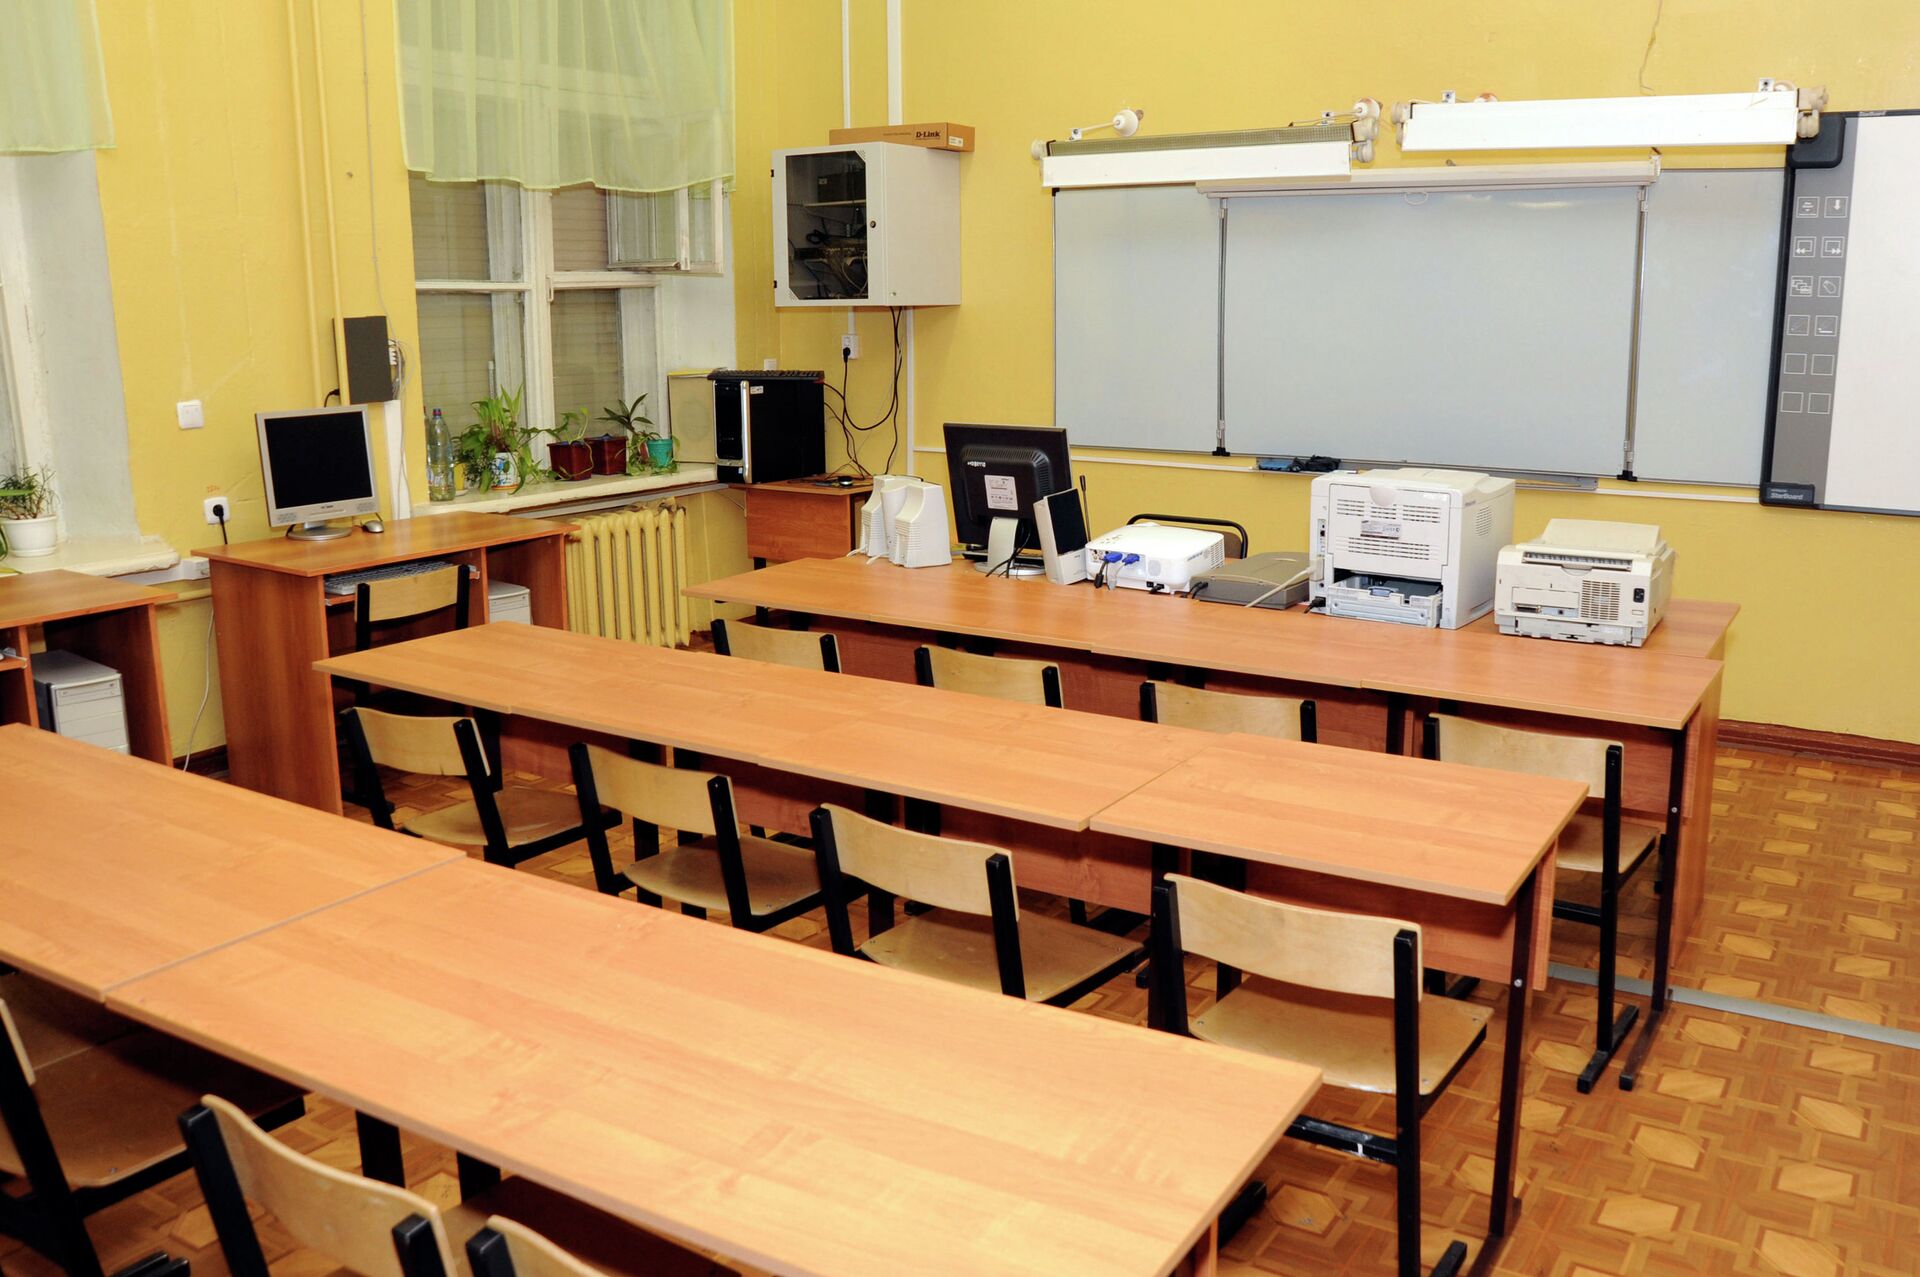 Средняя школа поселка Мурмаши Мурманской области закрыта на карантин - РИА Новости, 1920, 17.09.2021